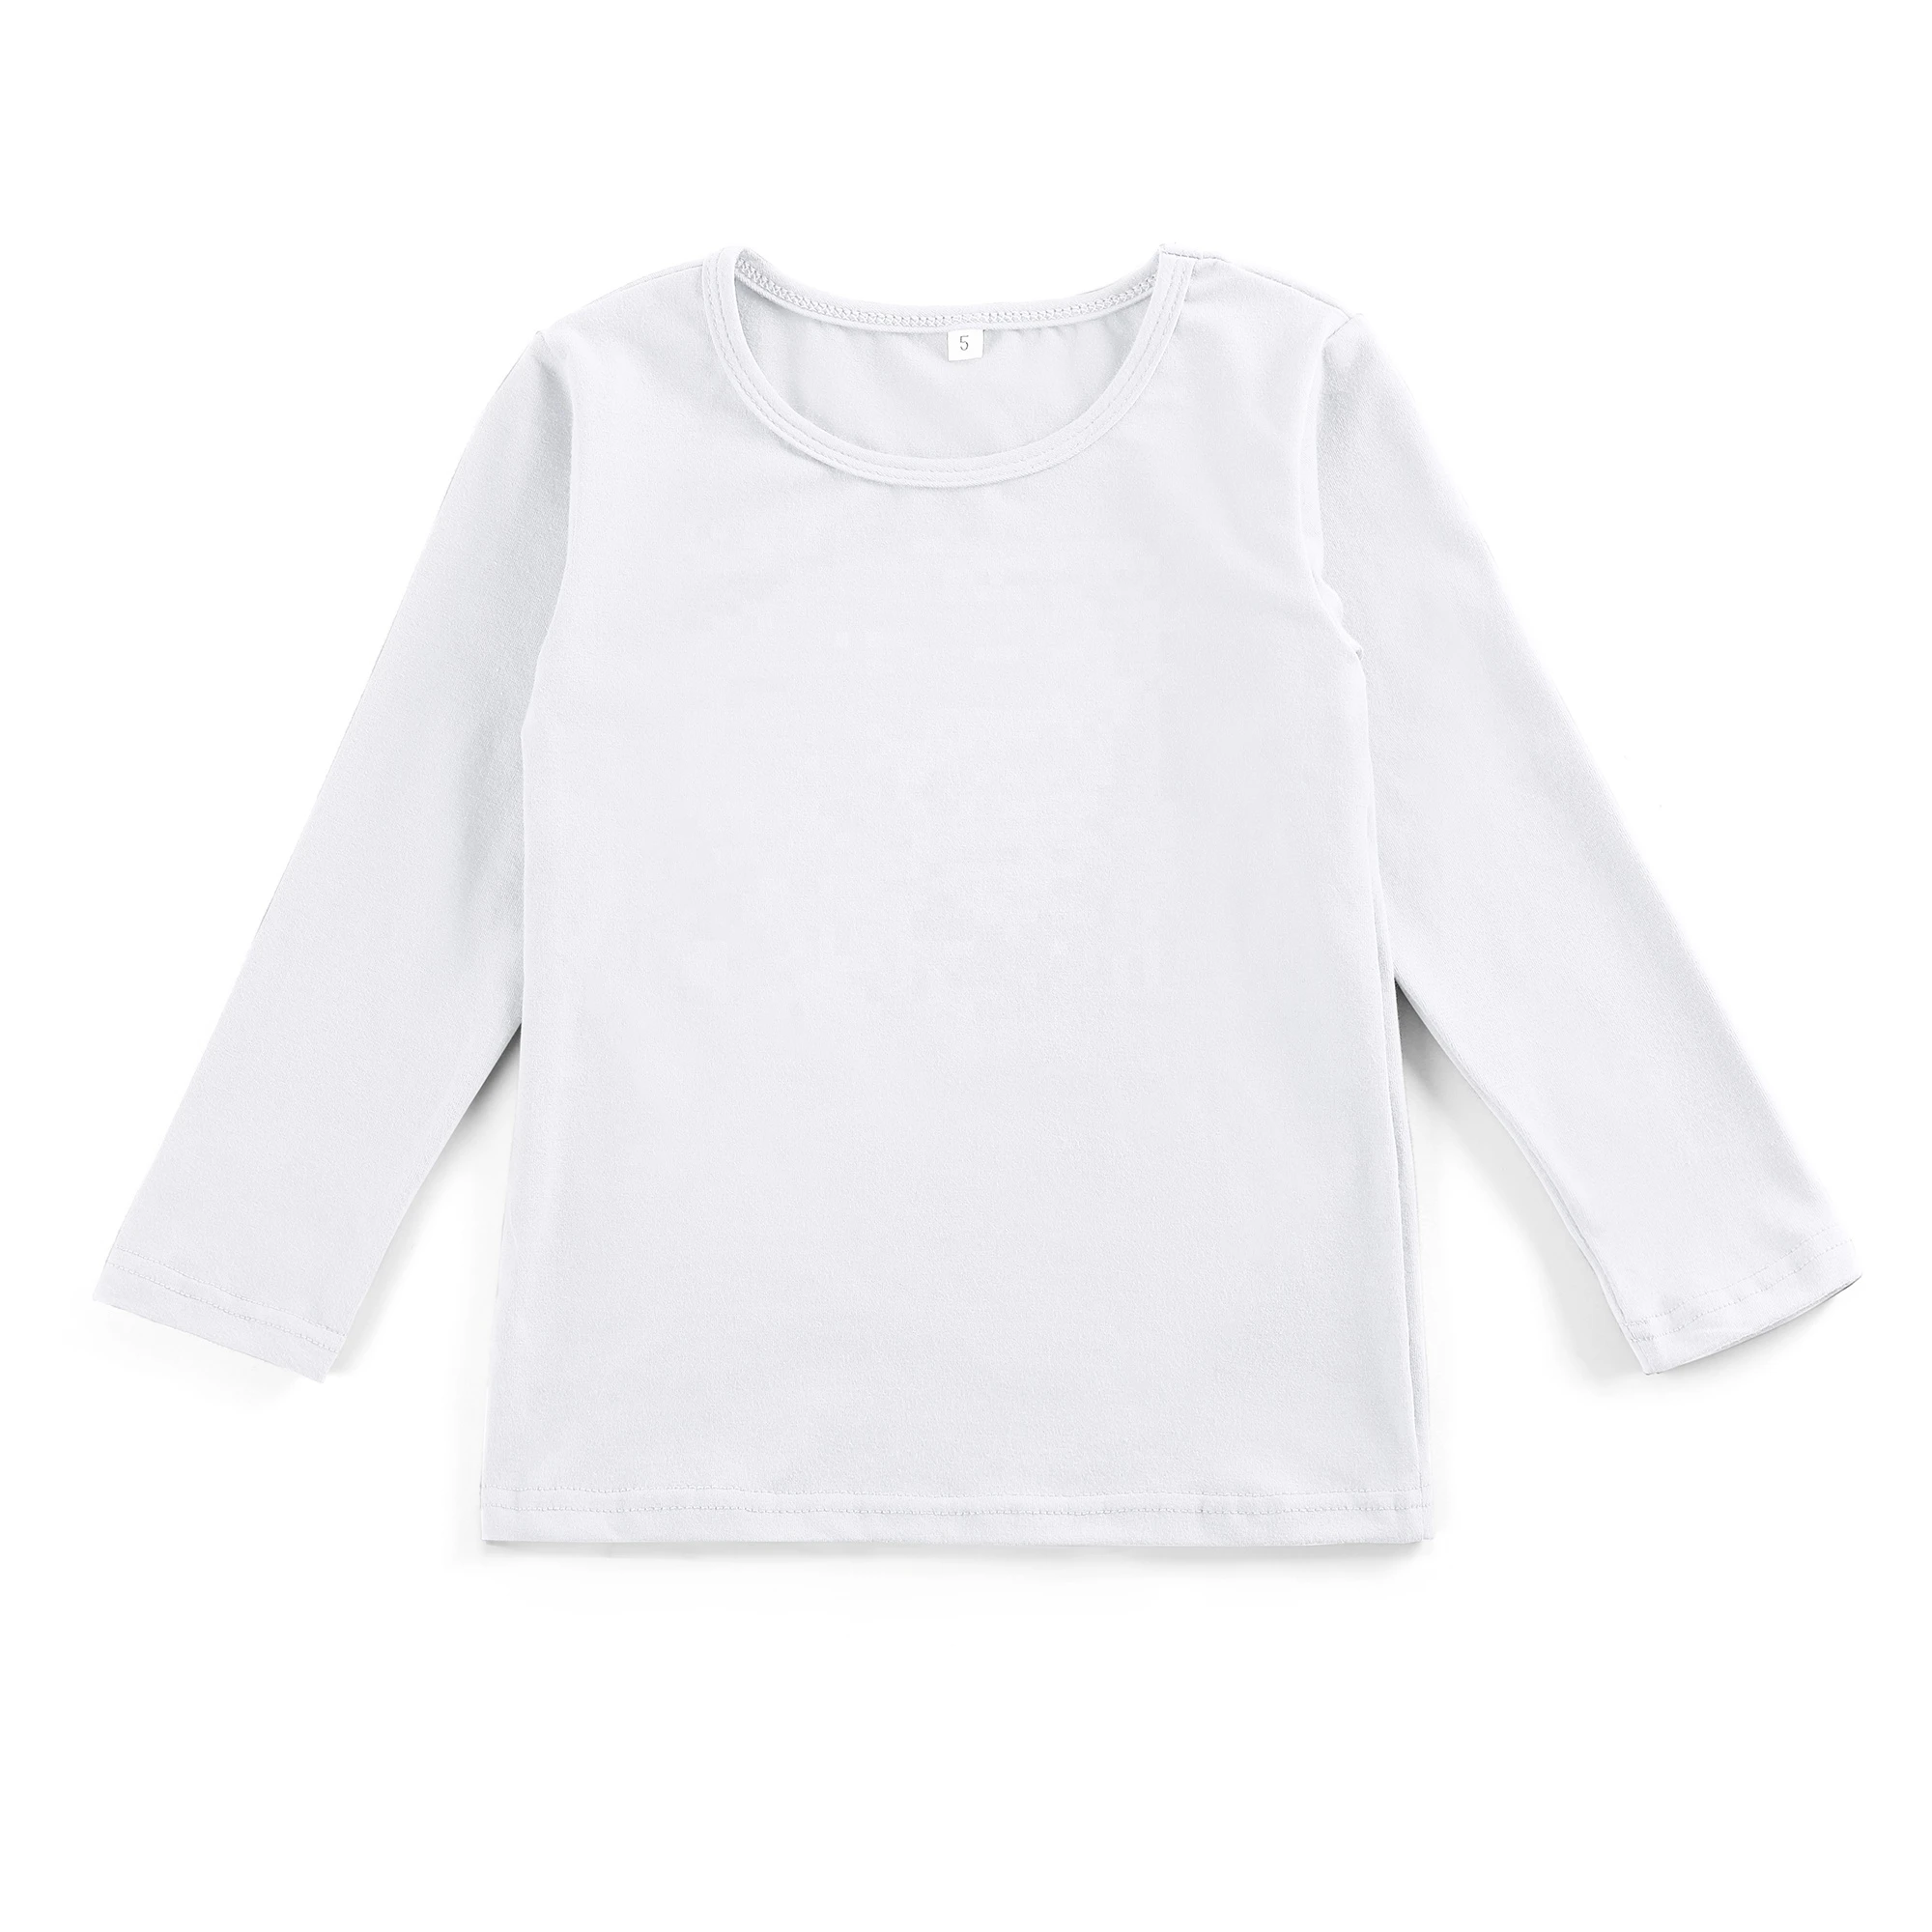 2020 Fall winter Stock boys t-shirts long sleeve 100% cotton unisex tops children kids tees RTS blank baby boy shirt